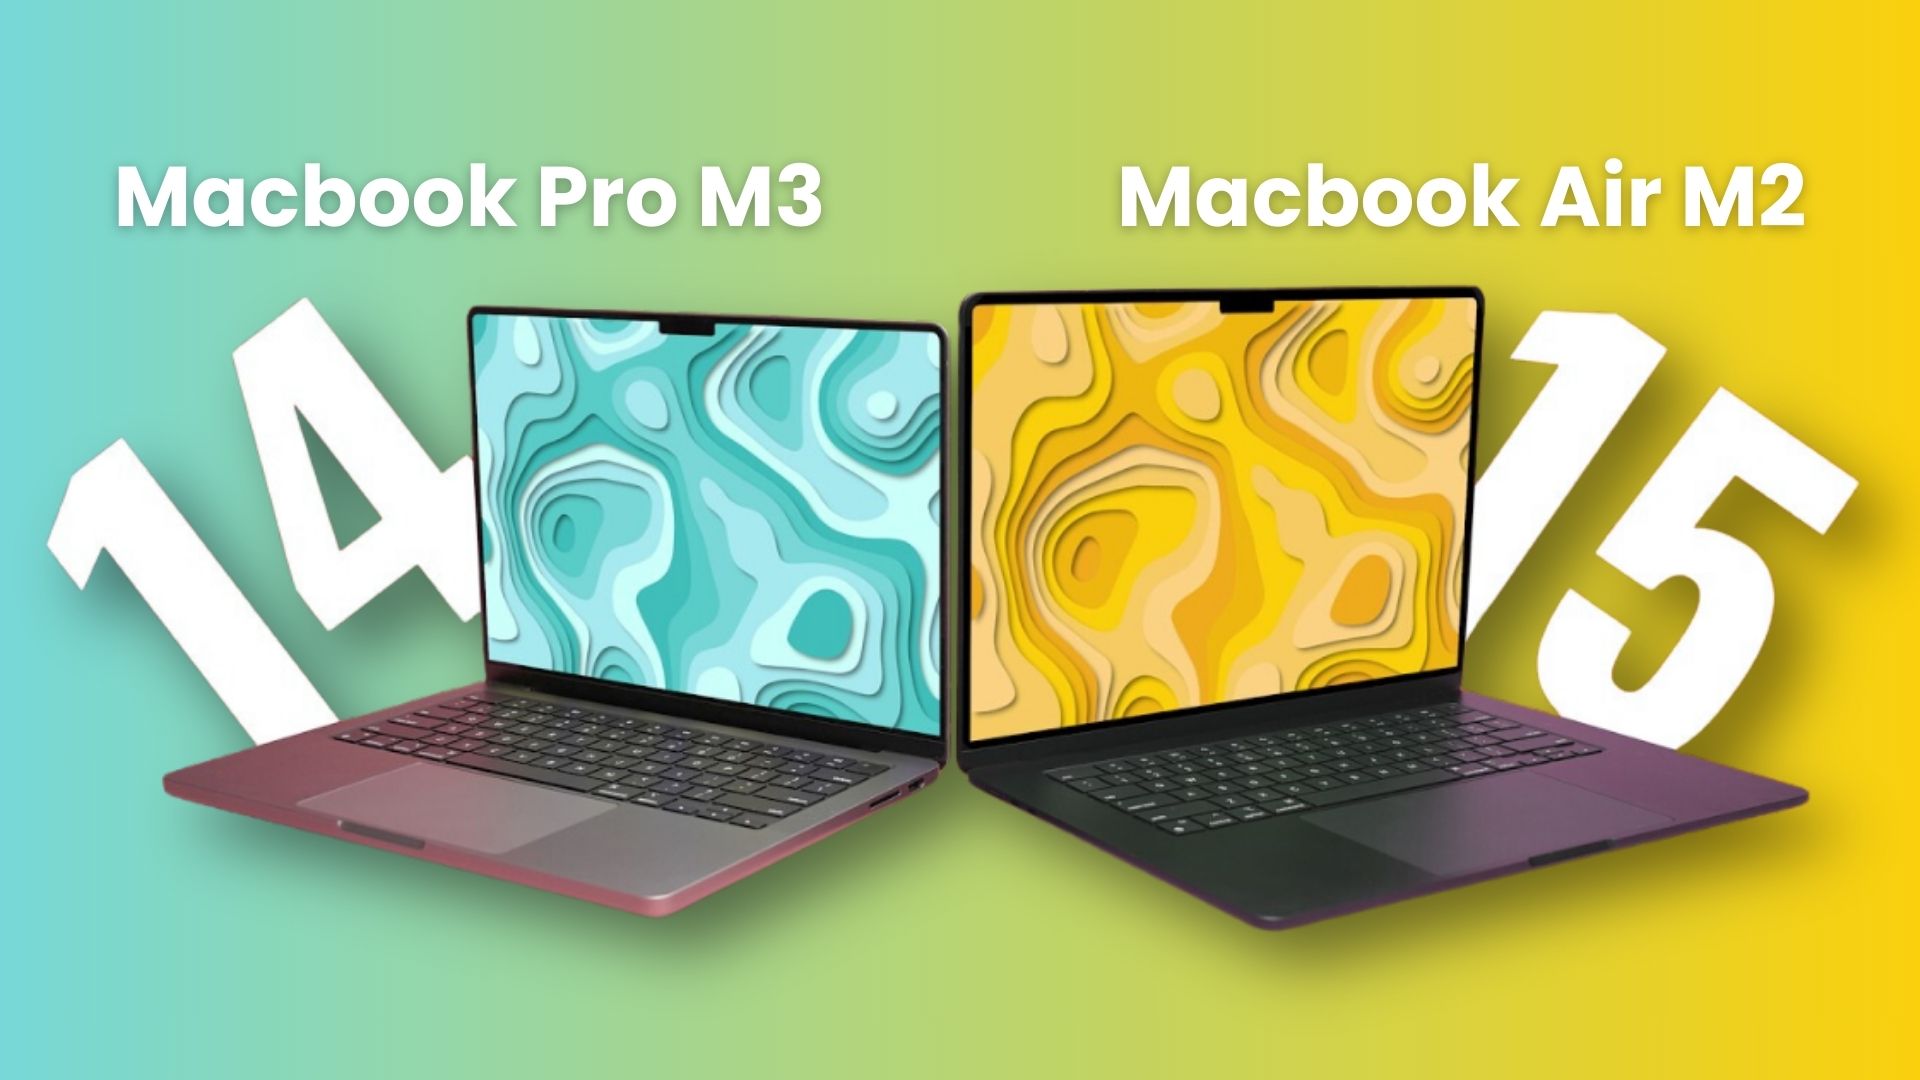 MacBook Air M2 vs Macbook Pro M3